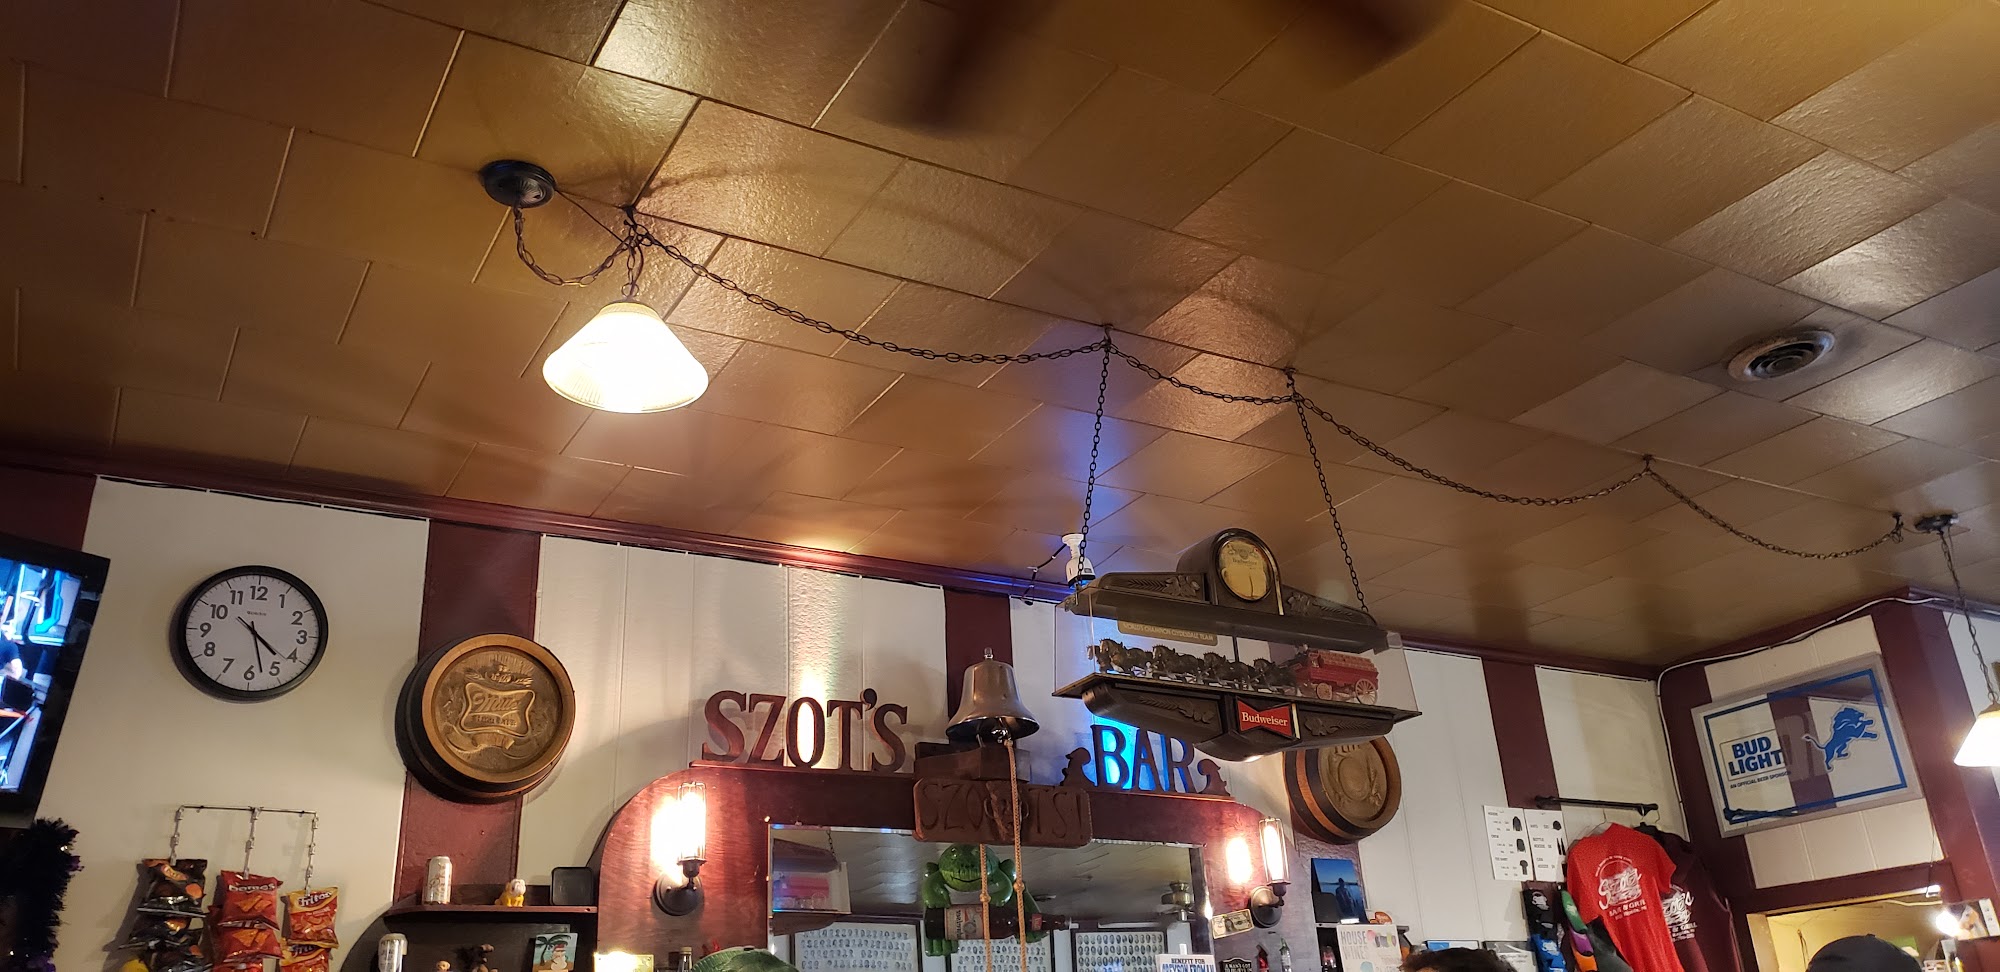 Szots Bar & Grill